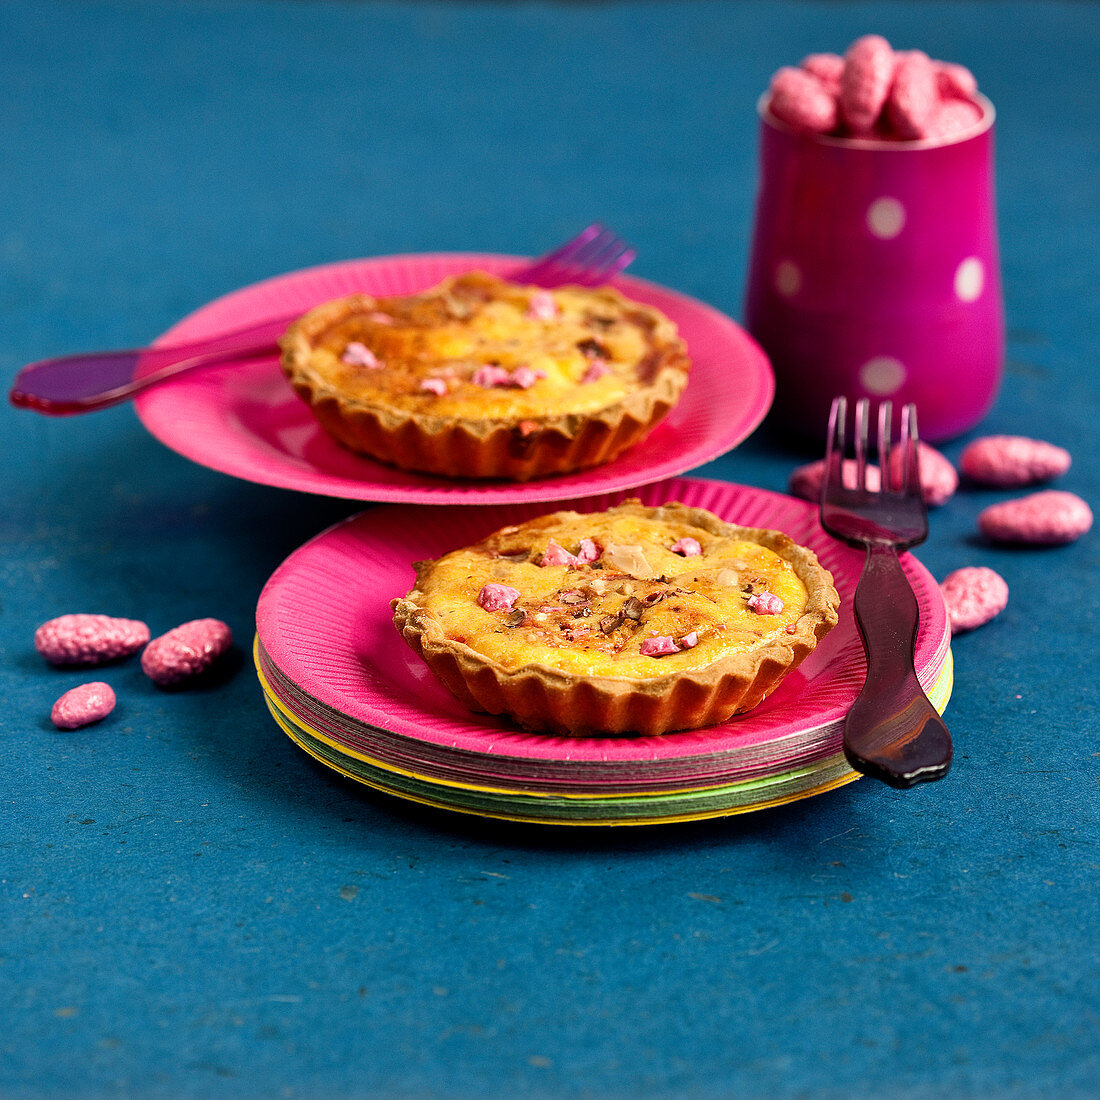 Small pink praline pies